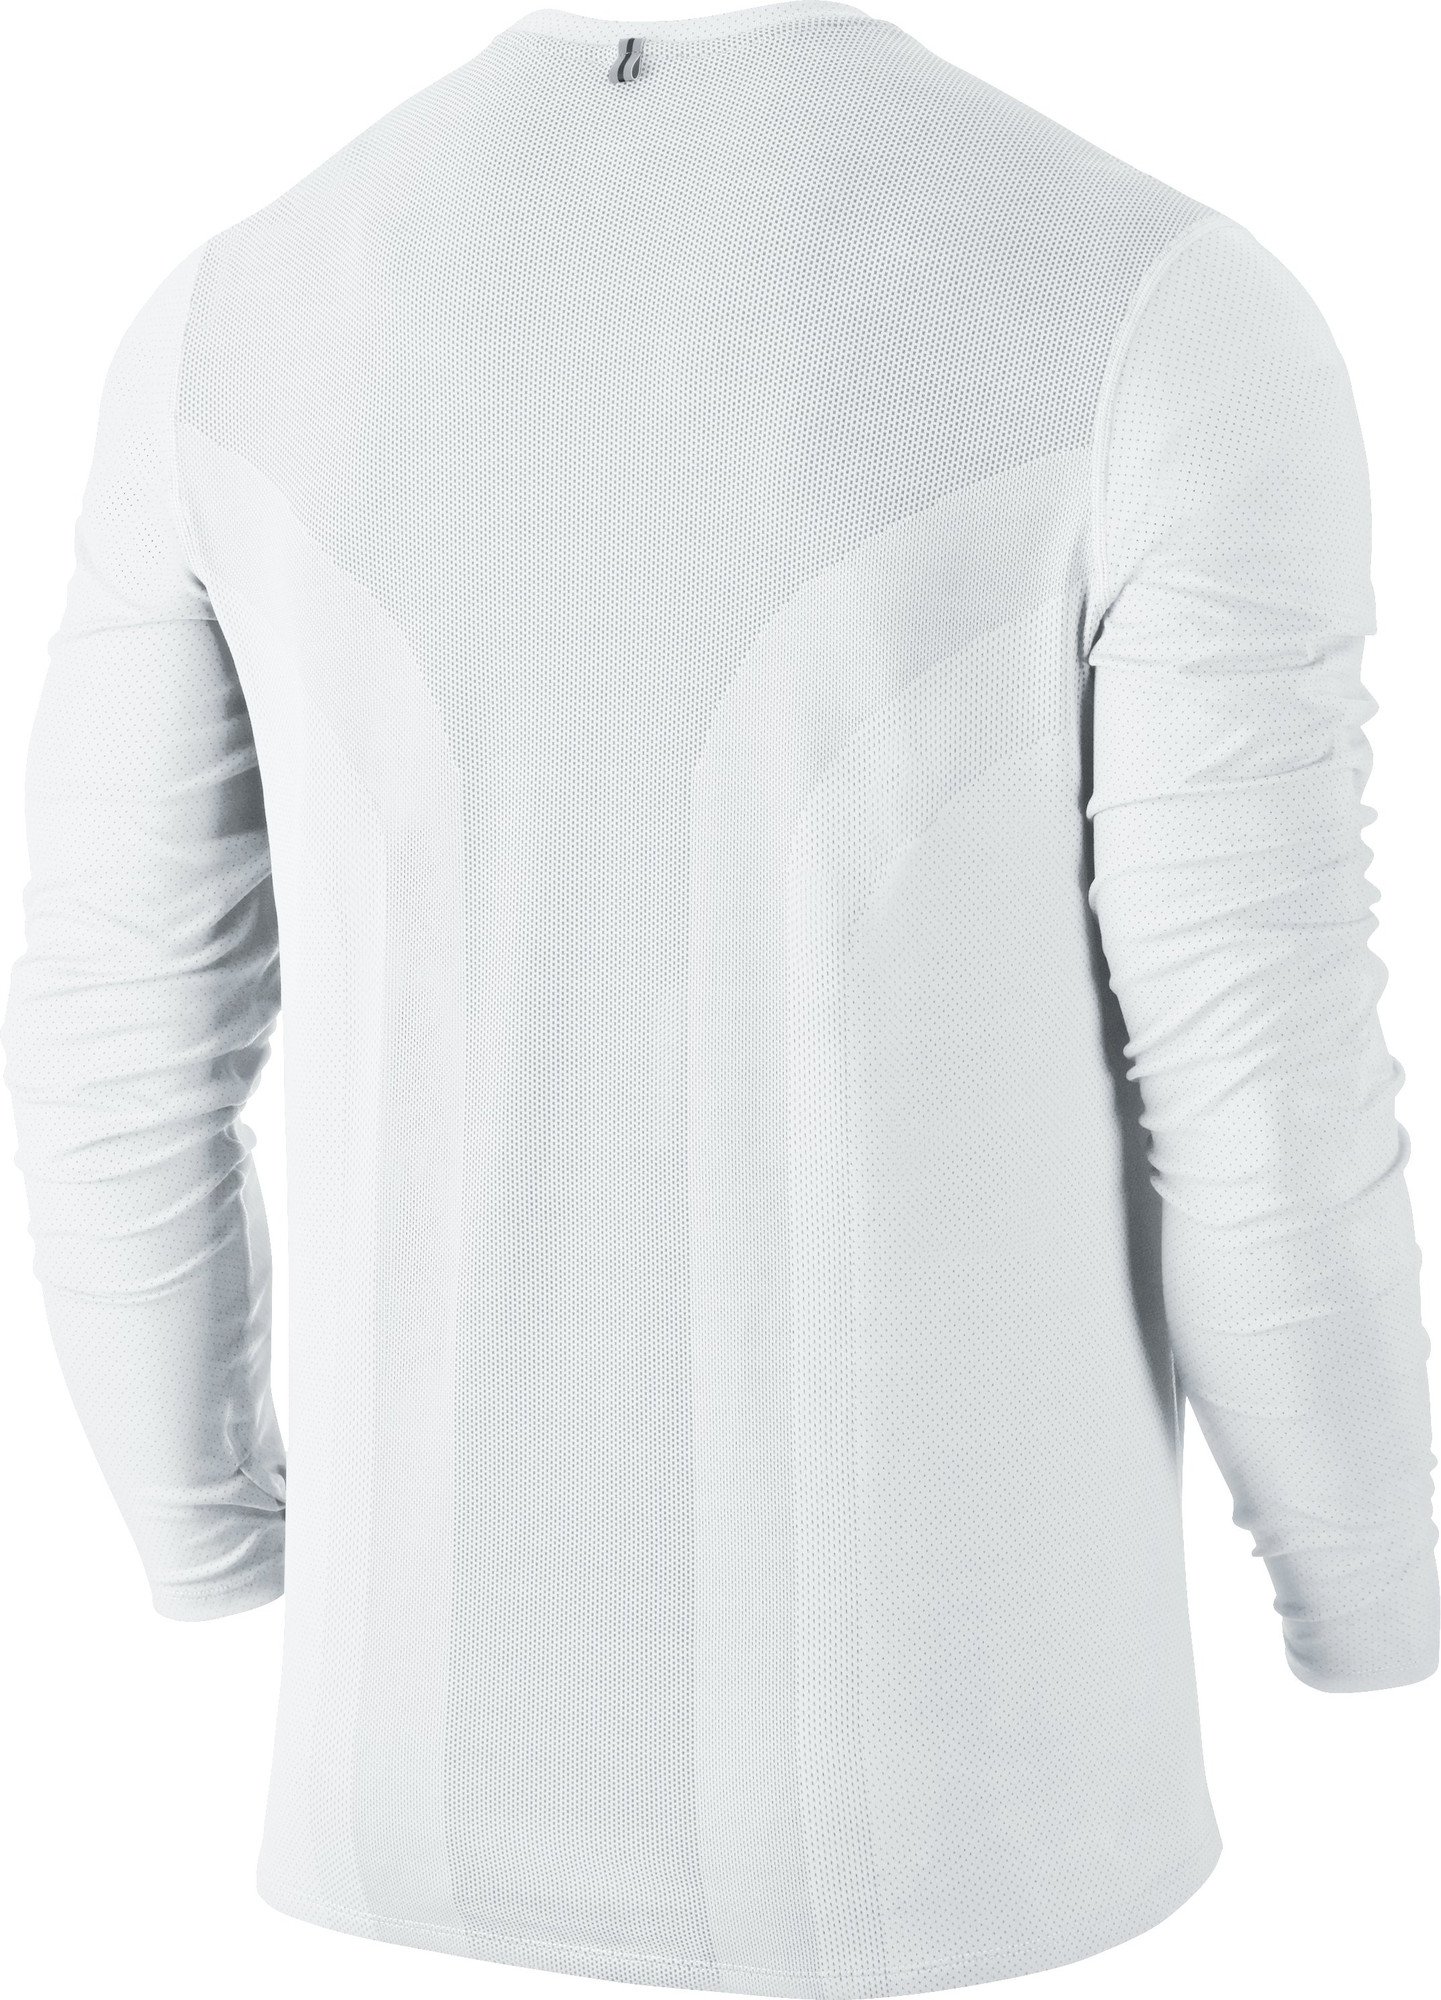 Long-sleeve T-shirt Nike DRI-FIT CONTOUR LS 